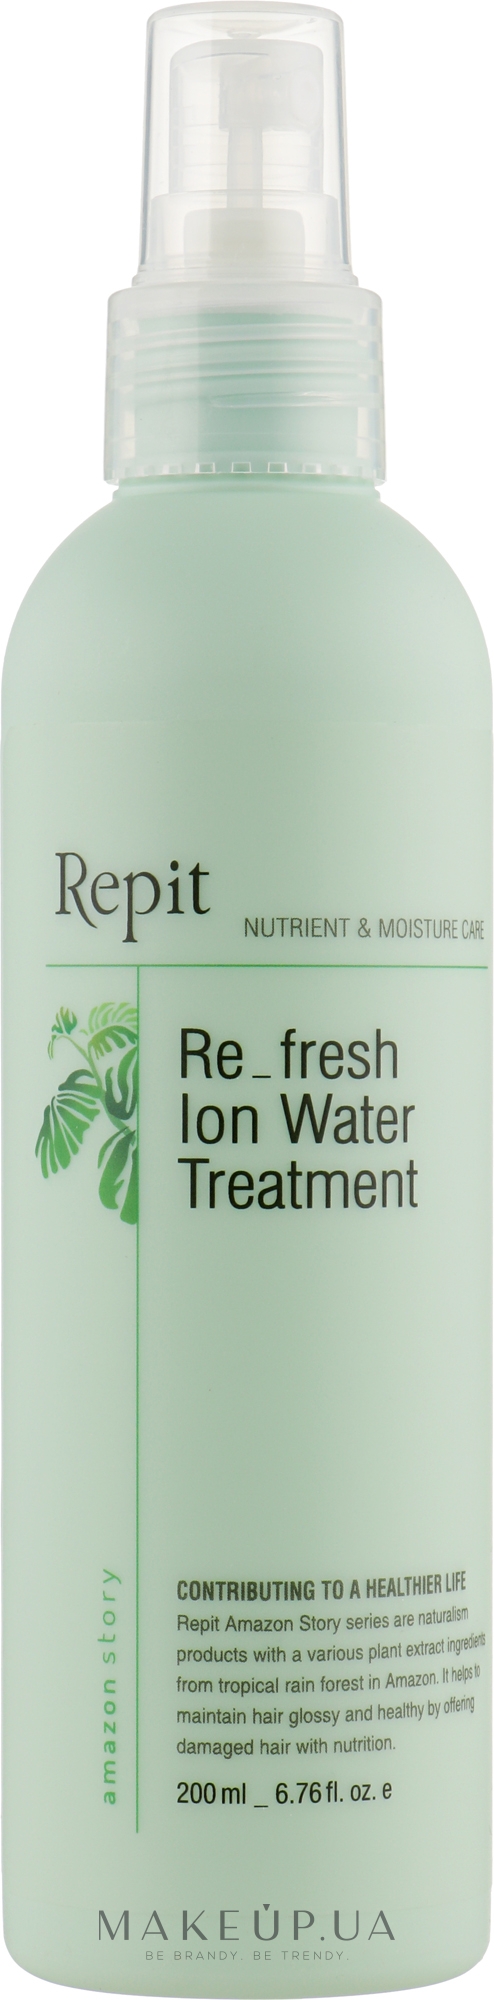 Іонізована вода - Repit Re Freshing Ion Water Treatment Amazon Story — фото 200ml